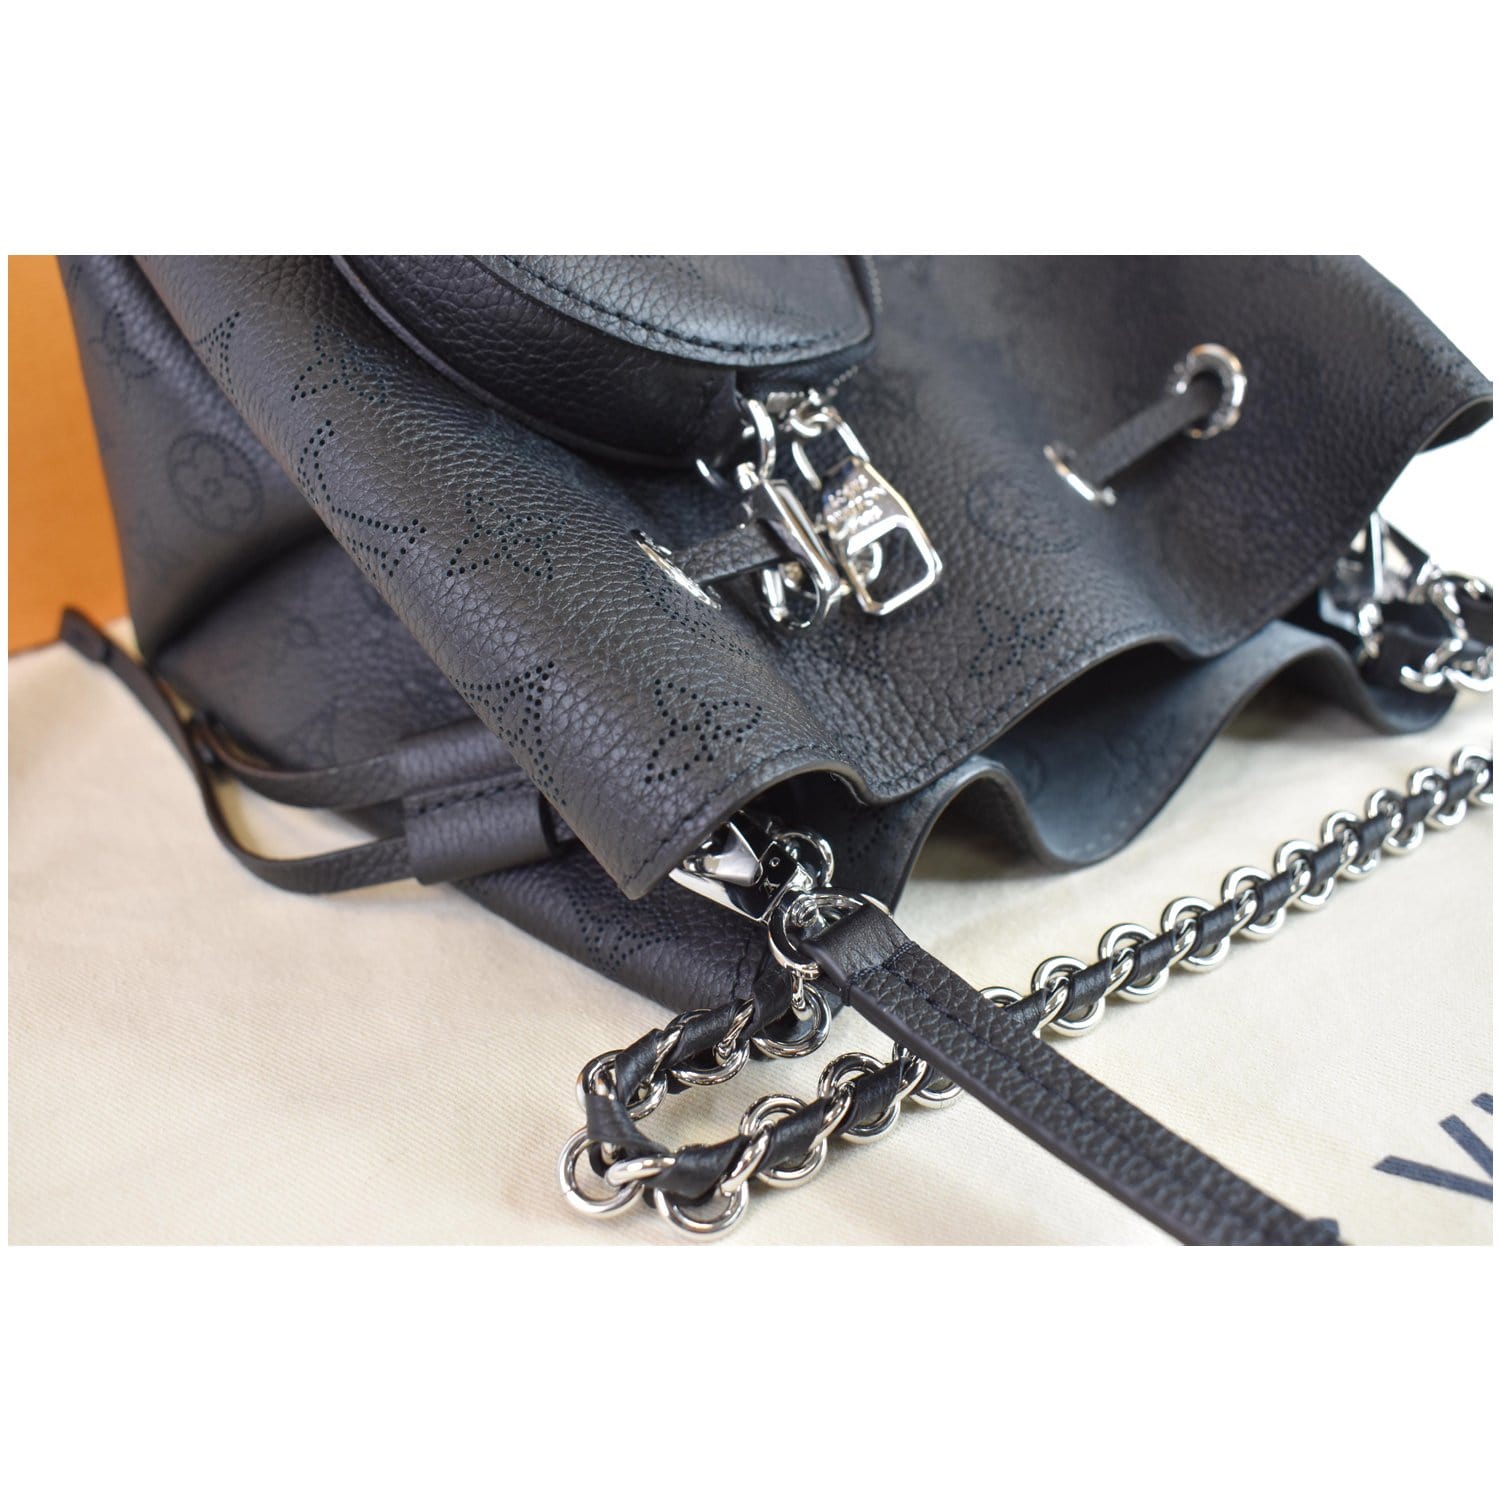 Bella Mahina Leather - Handbags